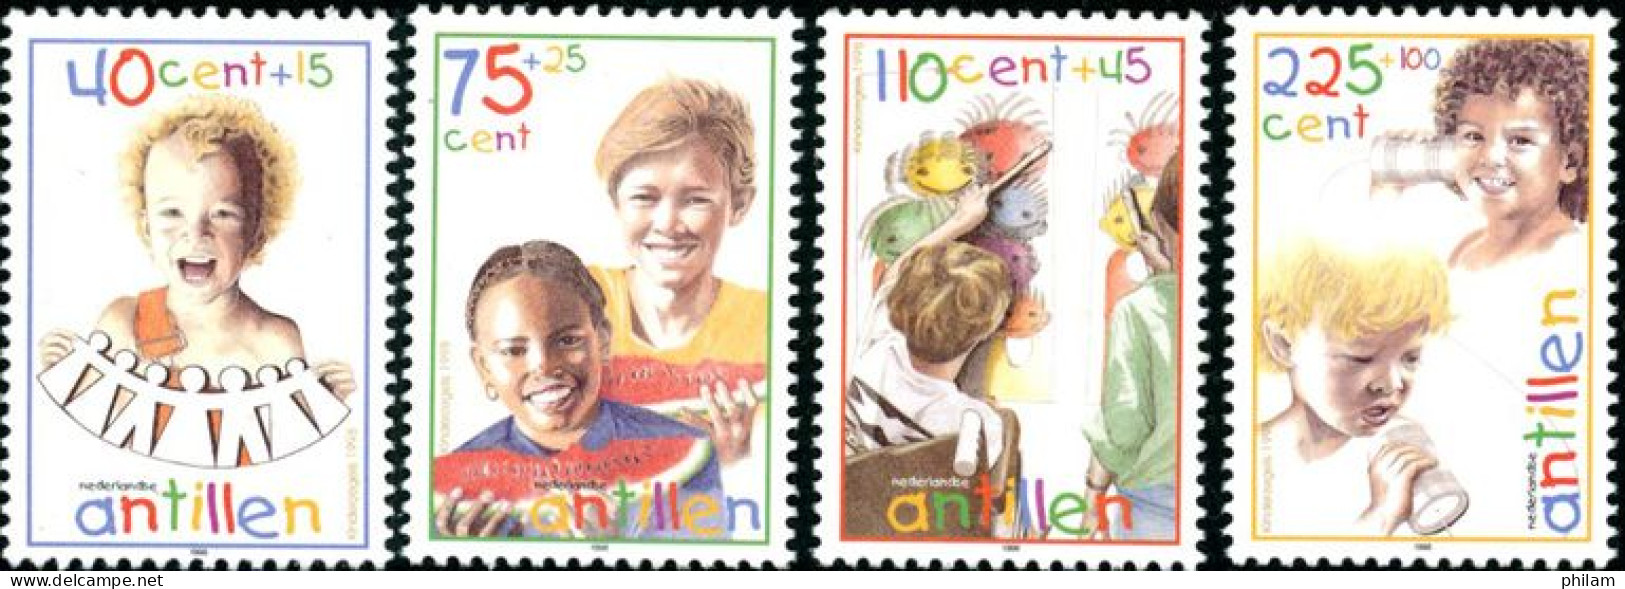 ANTILLES NEERLANDAISES 1998 - Droits De L'enfant - 4 V. - Curacao, Netherlands Antilles, Aruba